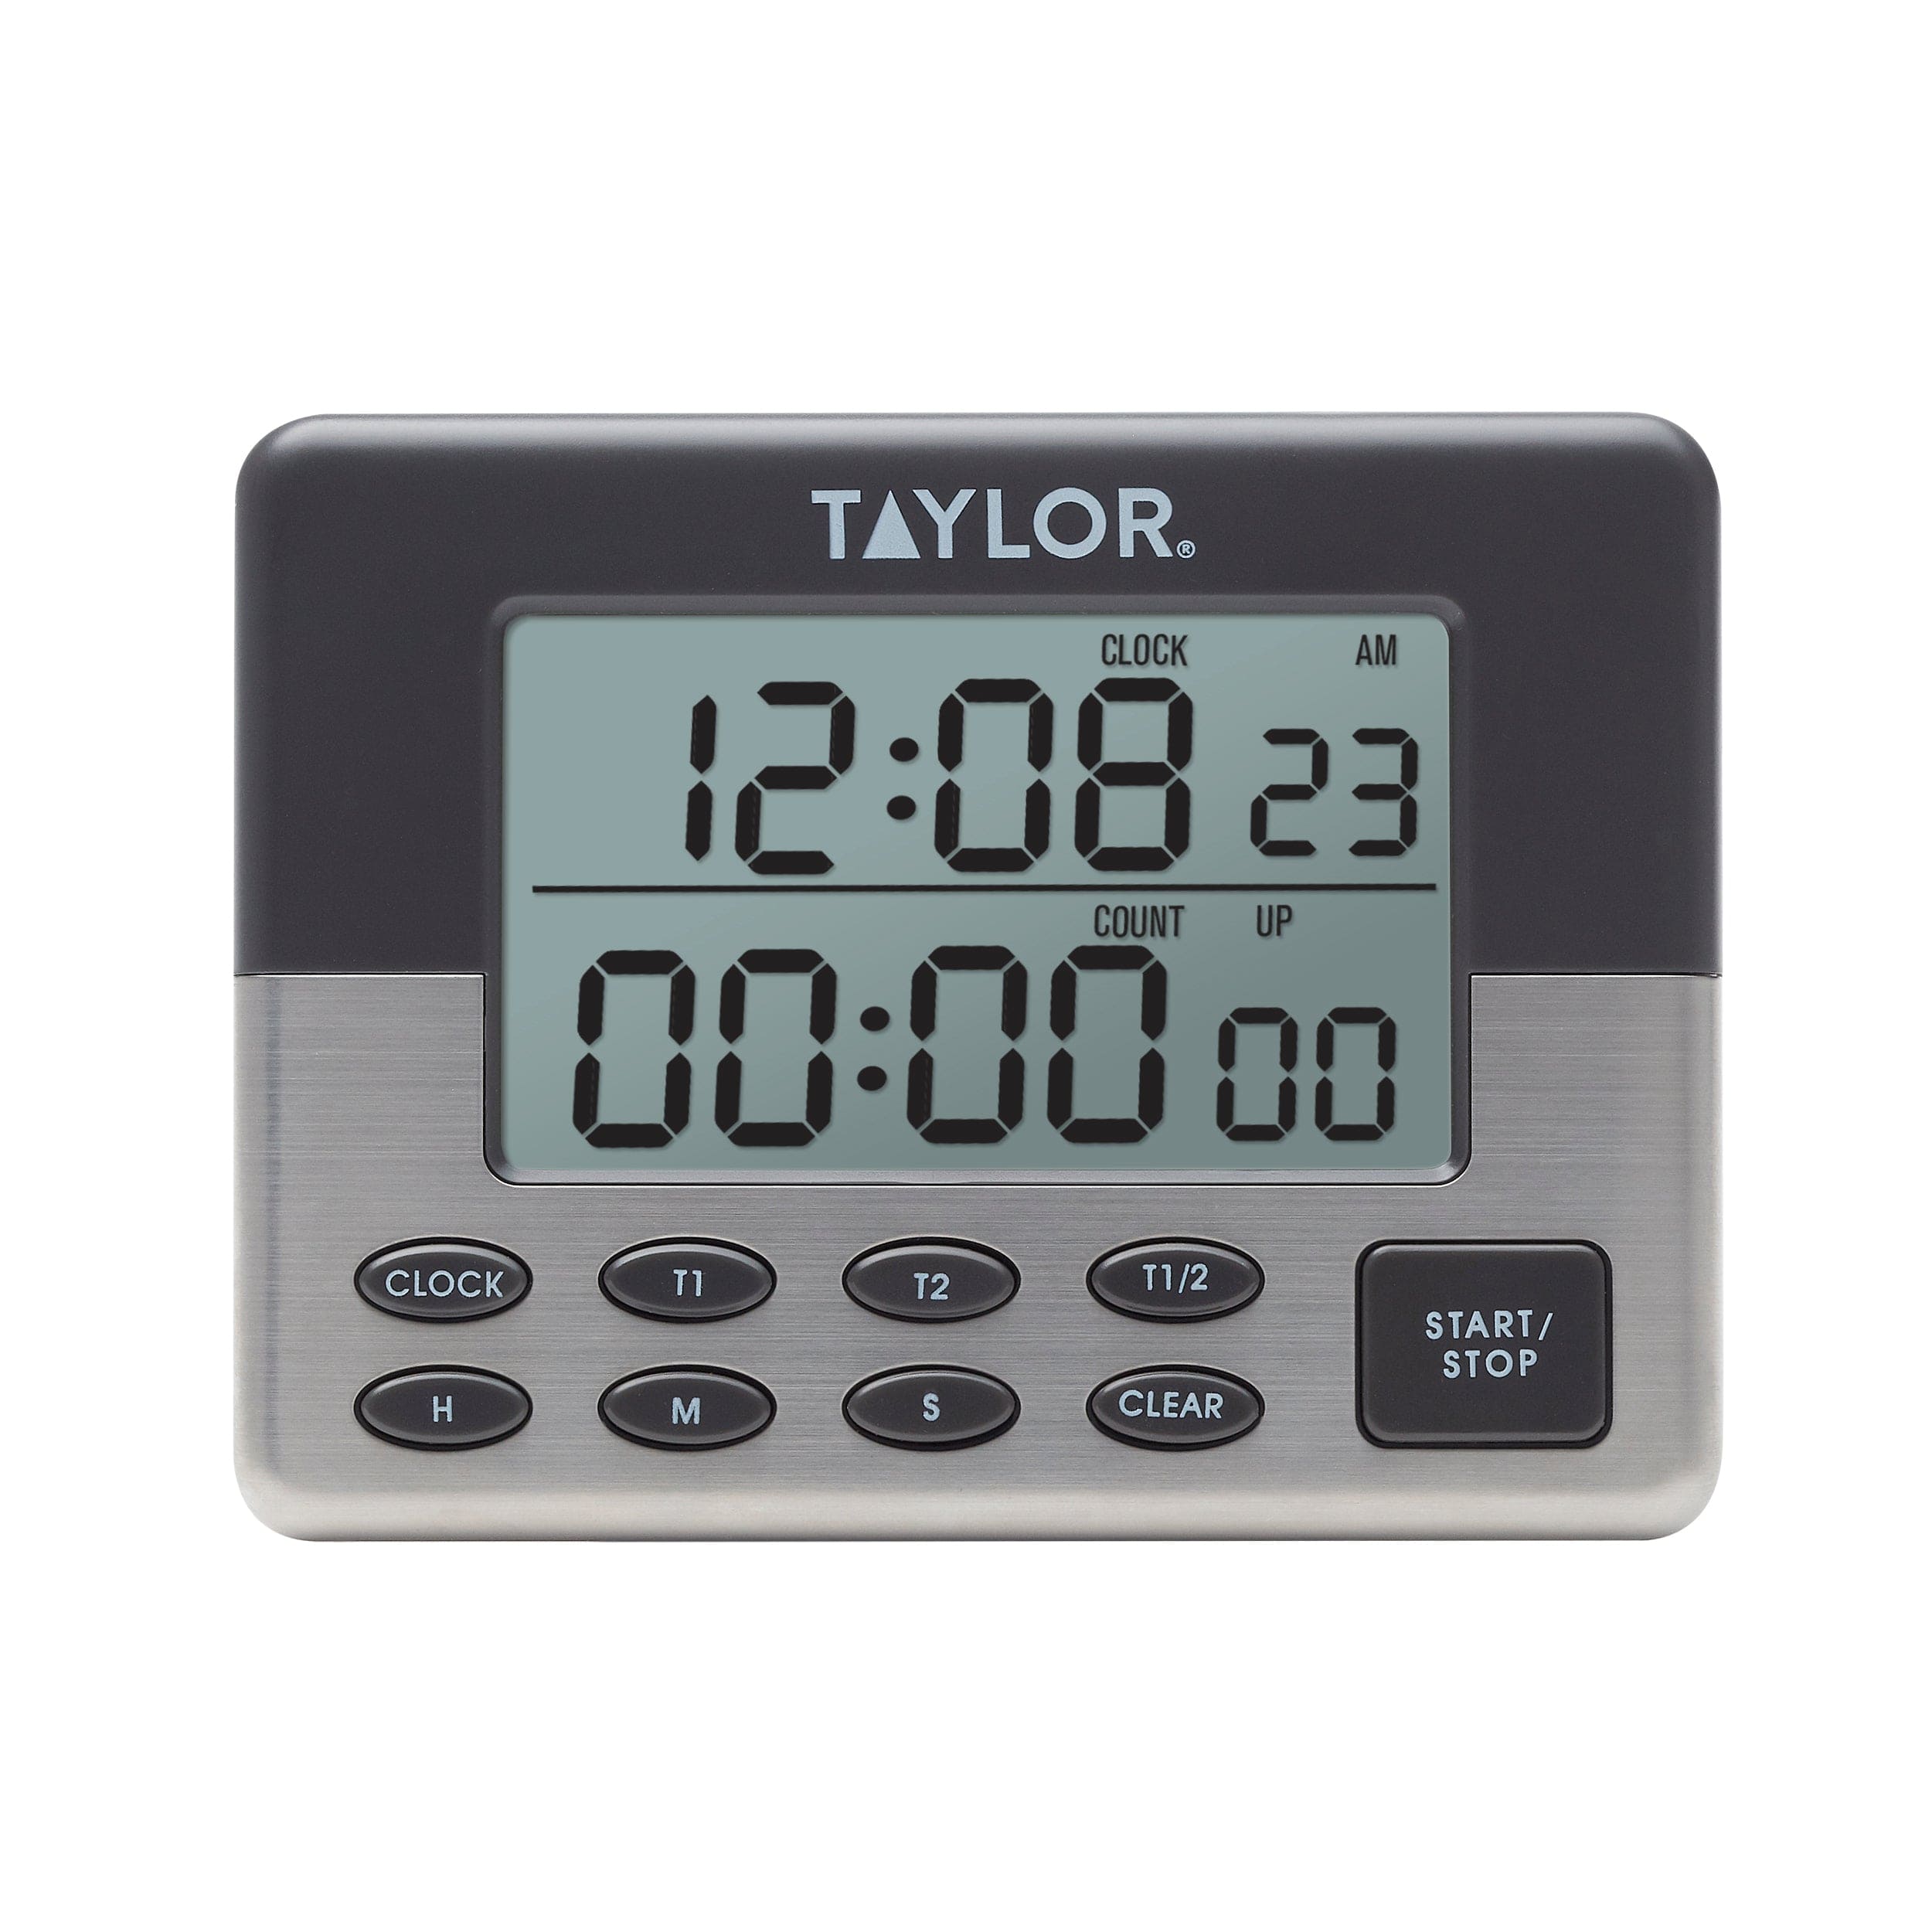 Digital Kitchen Timer Cooking Timer Clock Memory Hour Minute